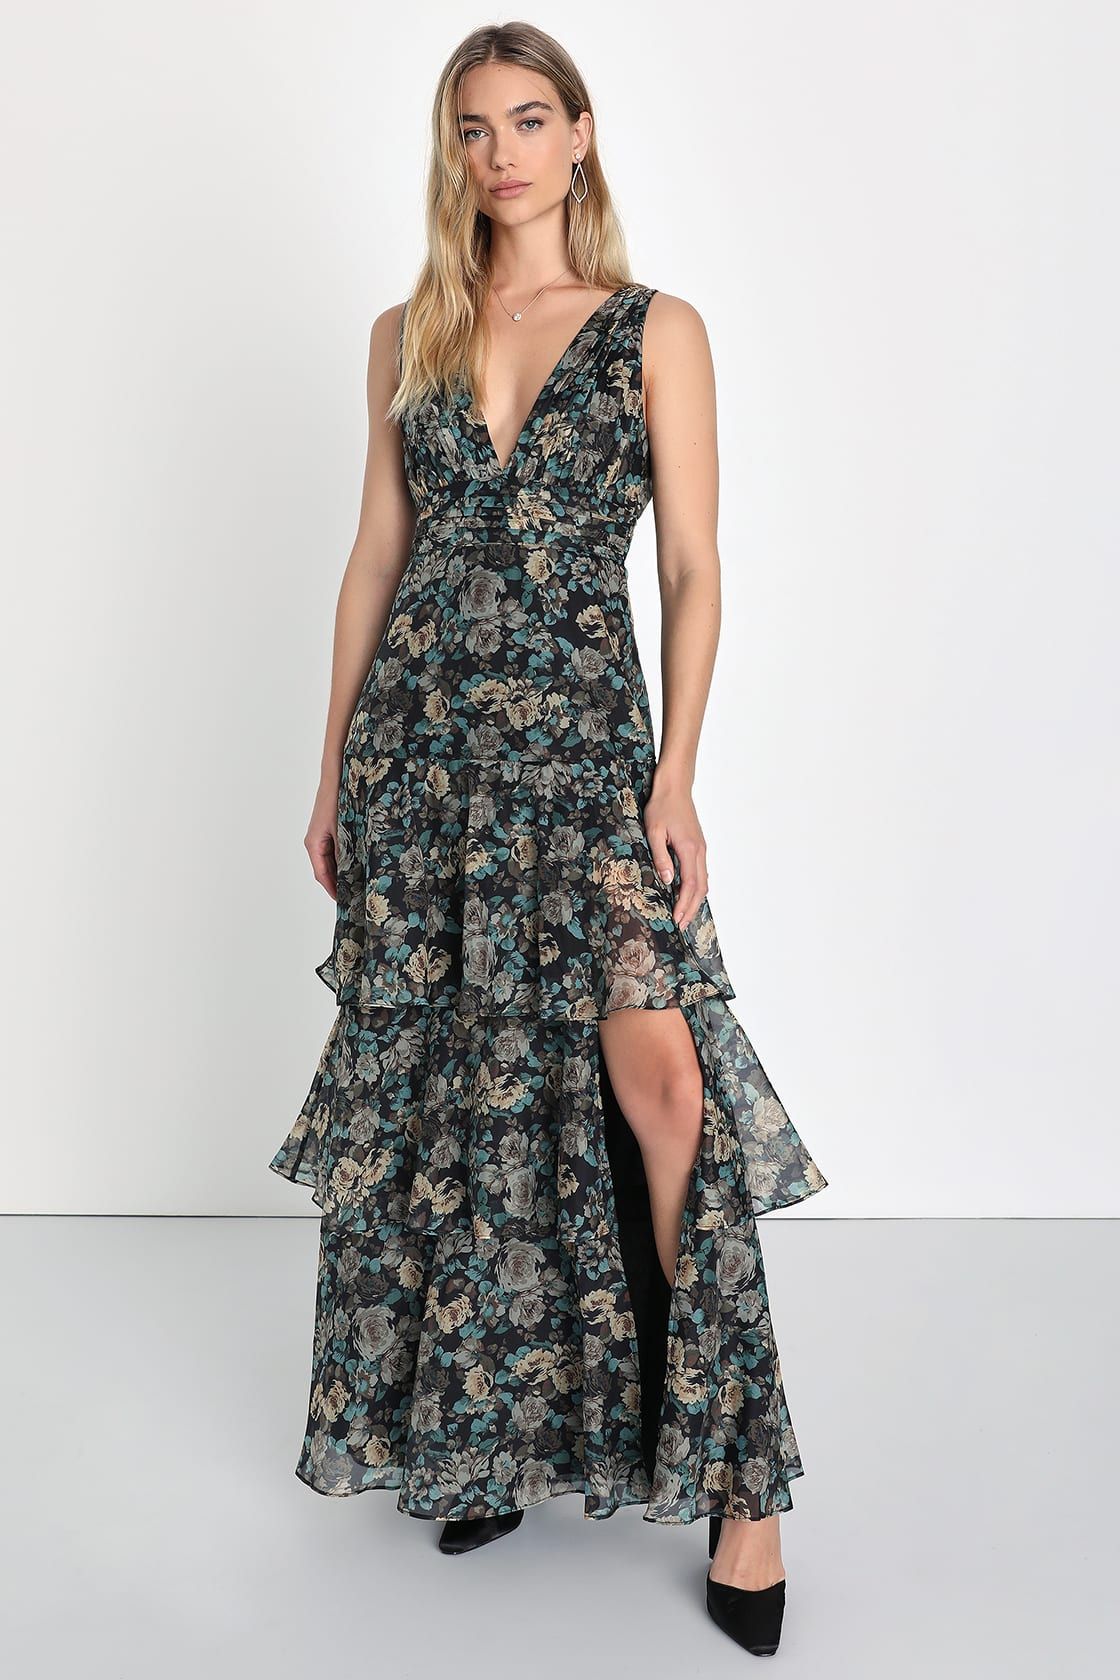 Sweeping Sensation Black Floral Print Organza Pleated Maxi Dress | Lulus